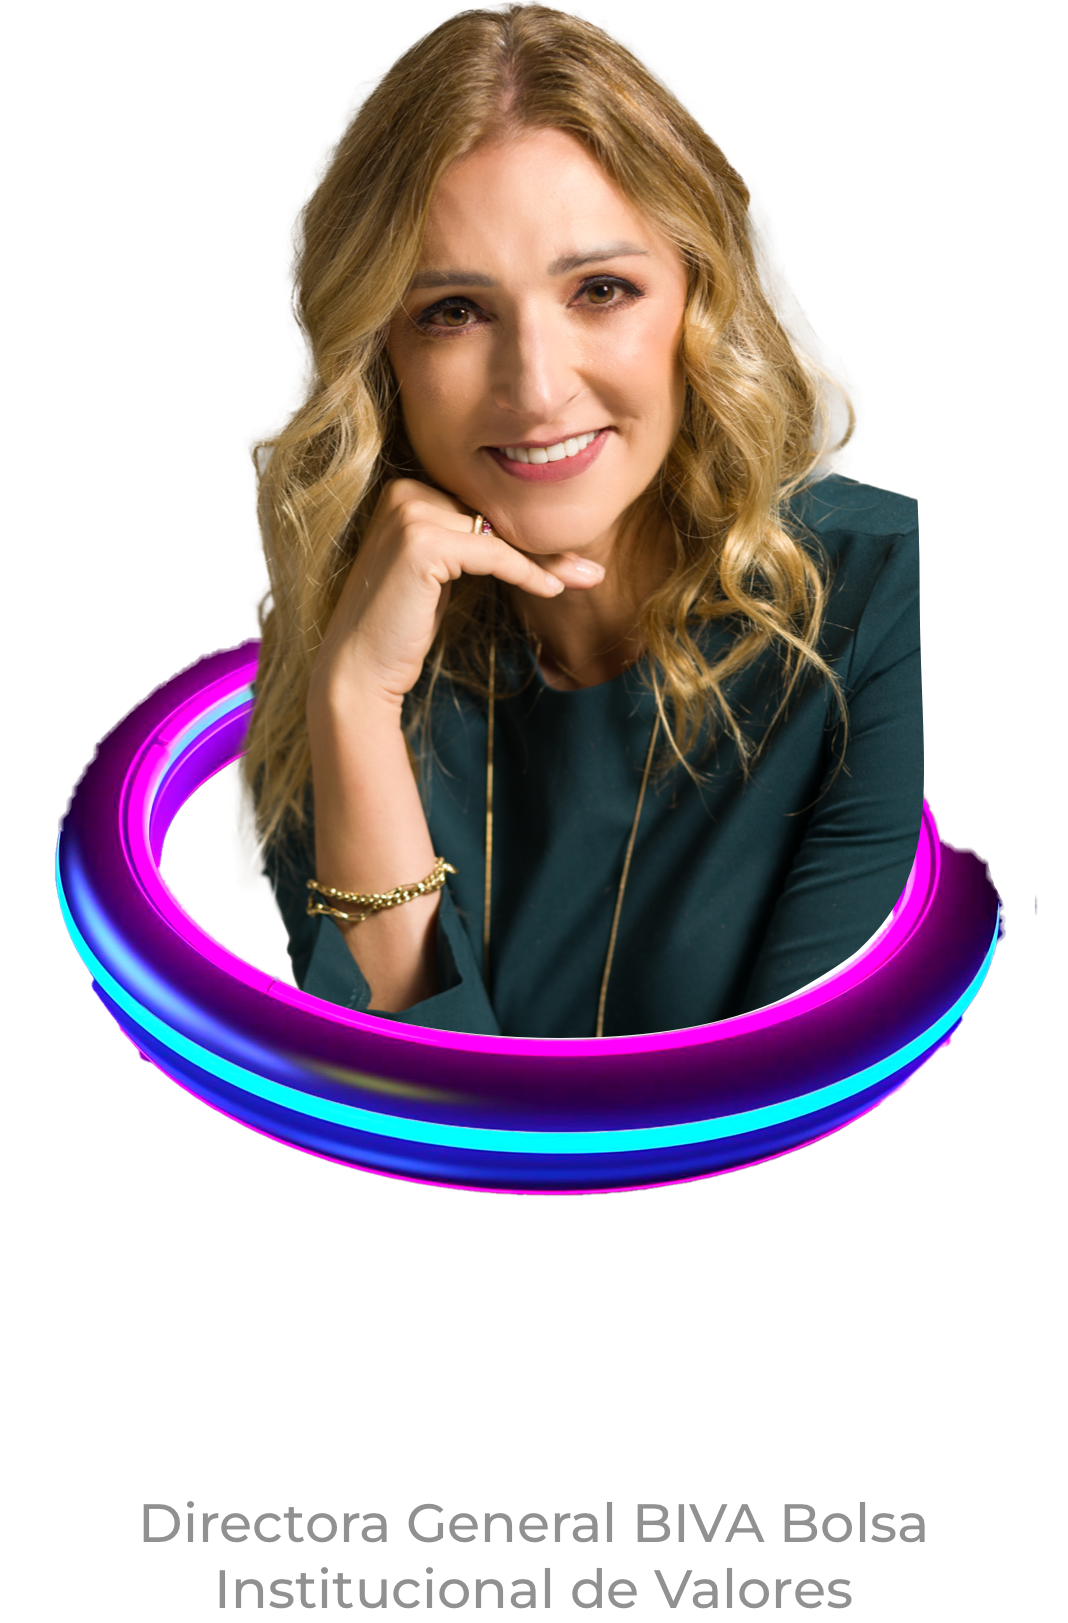 33 Maria Ariza Garcia-Migoya